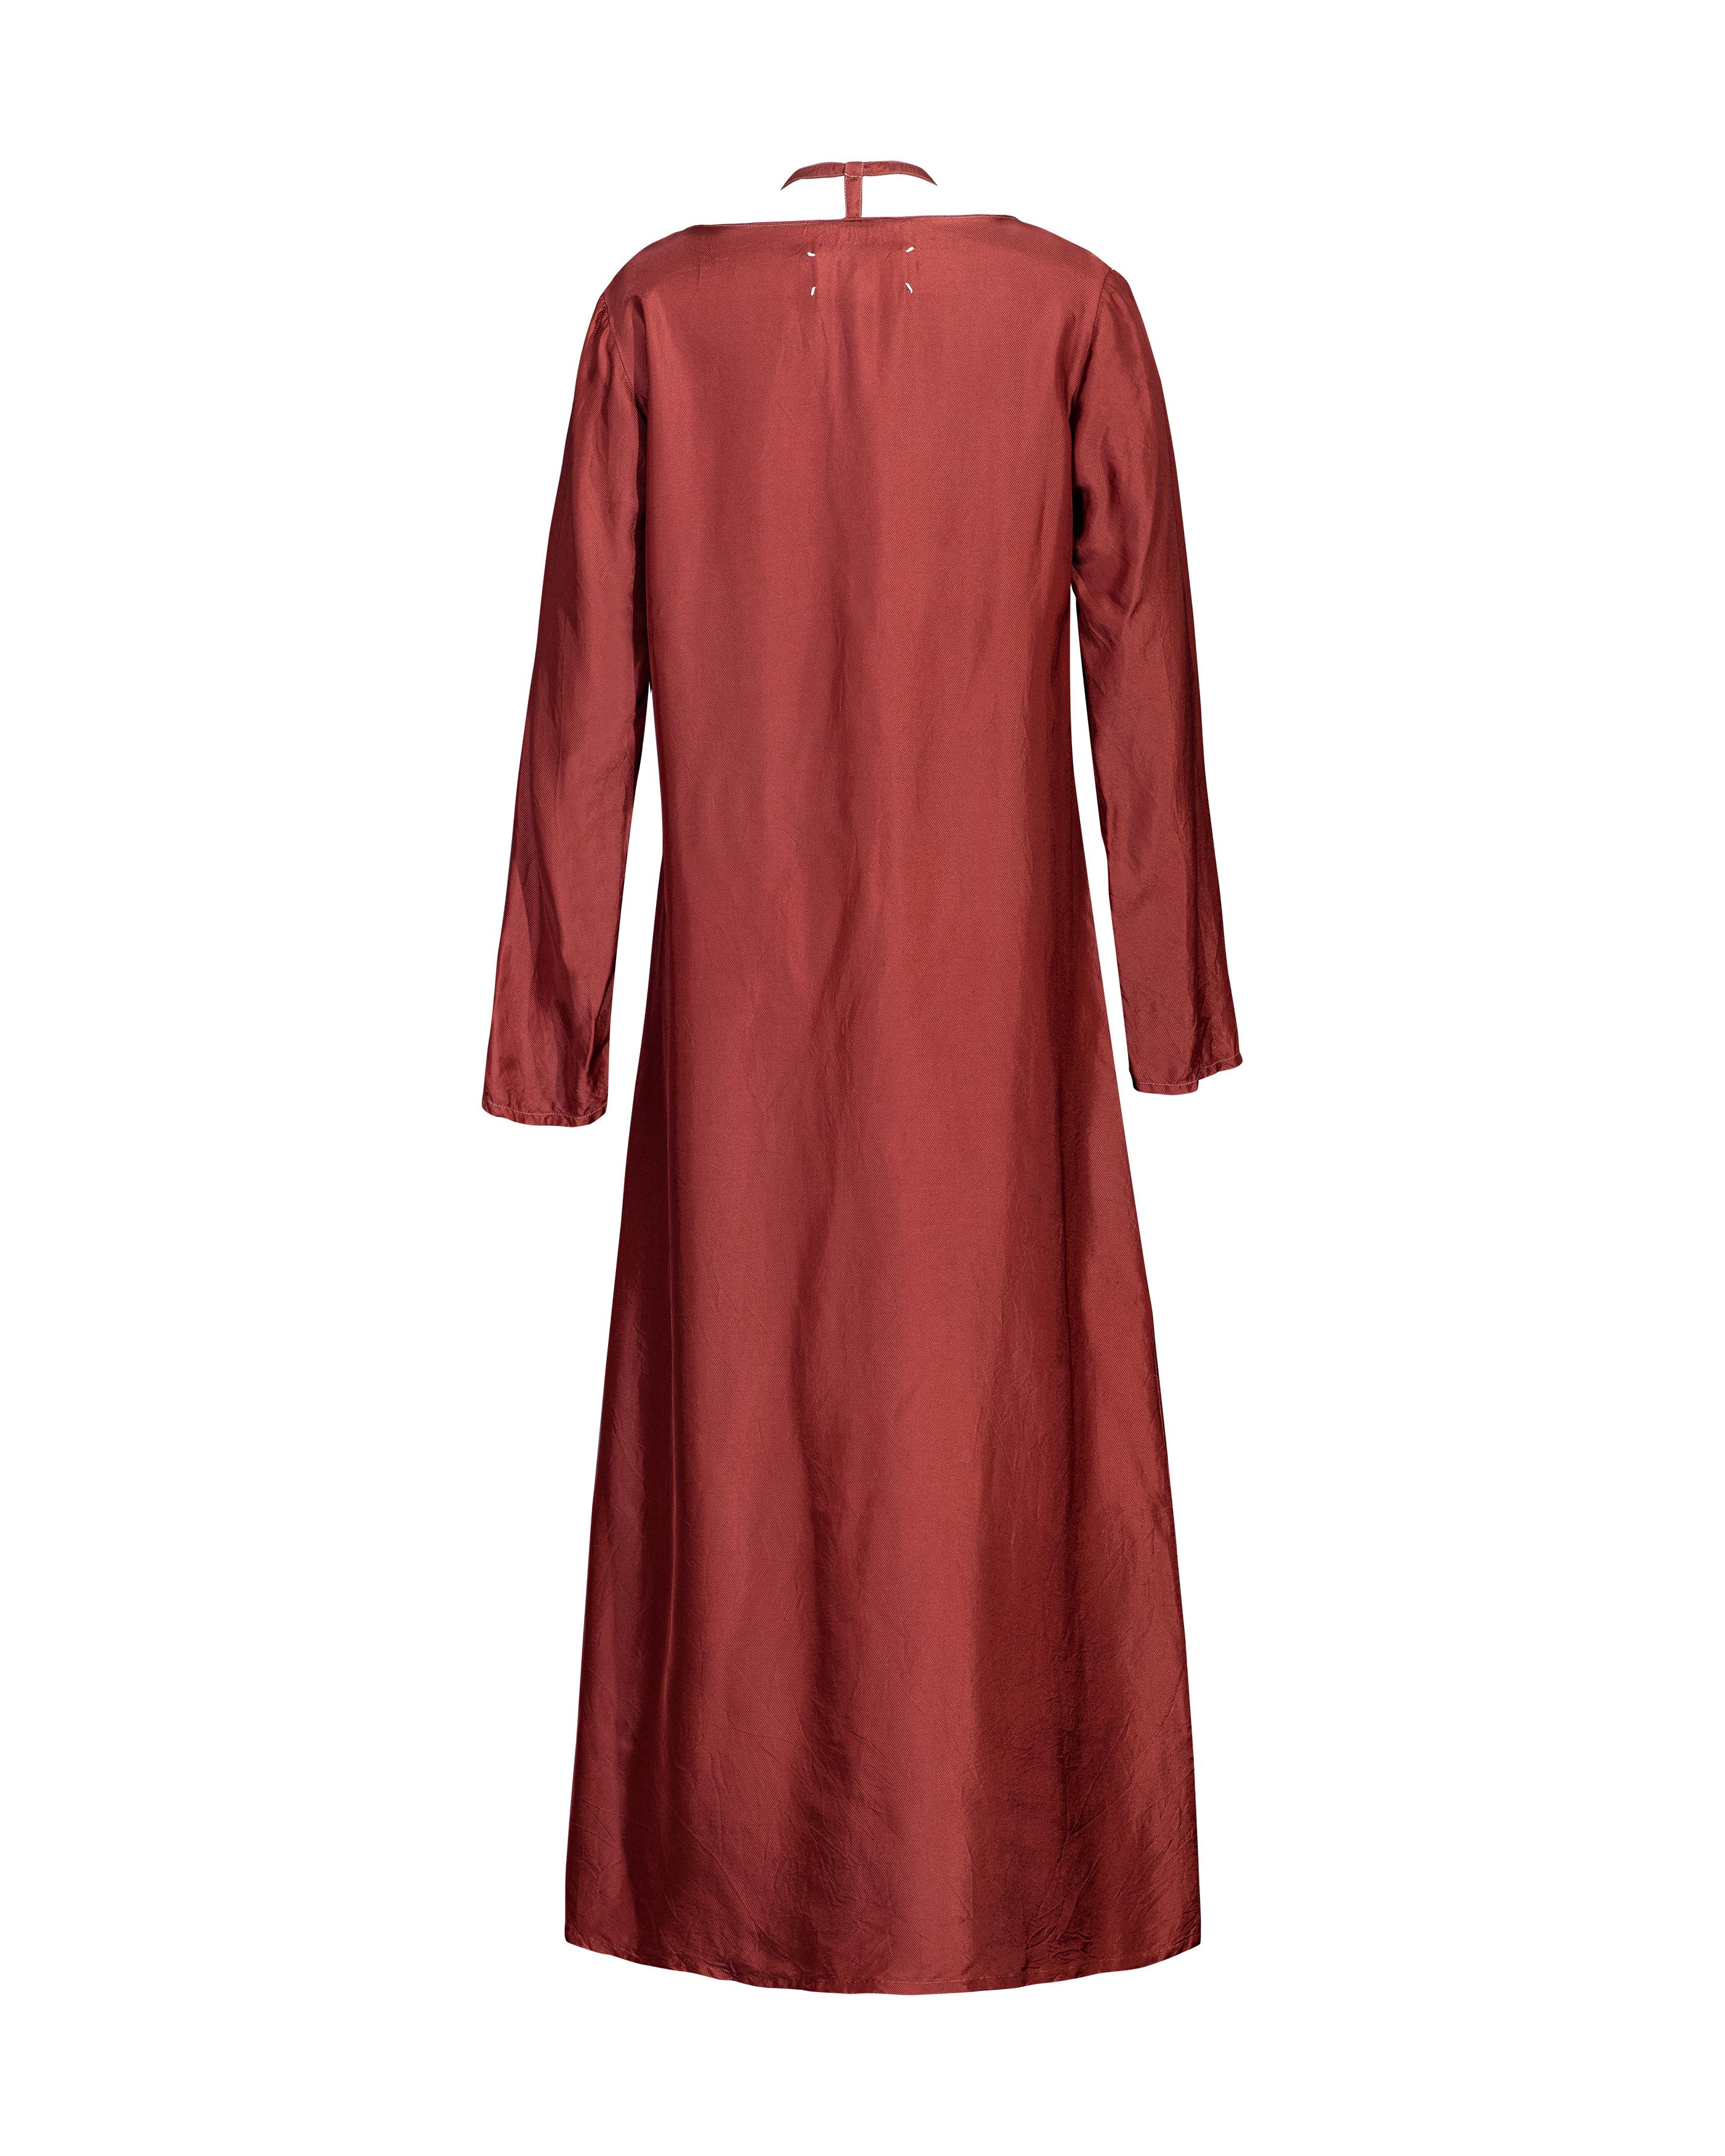 A/W 1999 Maison Martin Margiela Deep Rust Color-way 'Lining' Long Sleeve Dress For Sale 1